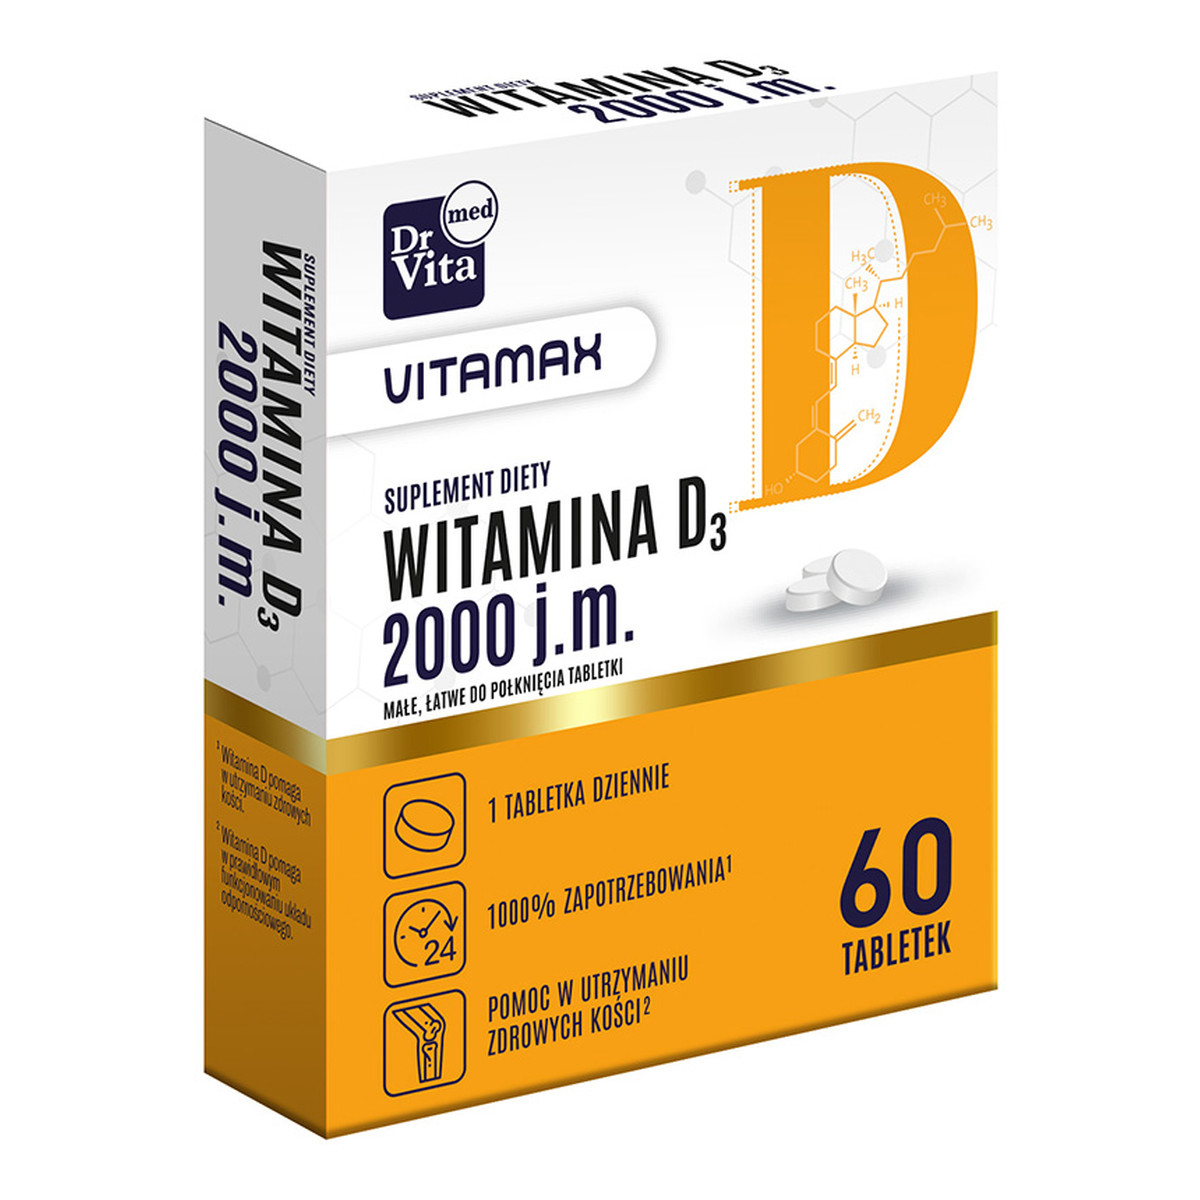 Dr Vita Vitamax witamina d 2000 j.m. suplement diety 60 tabletek